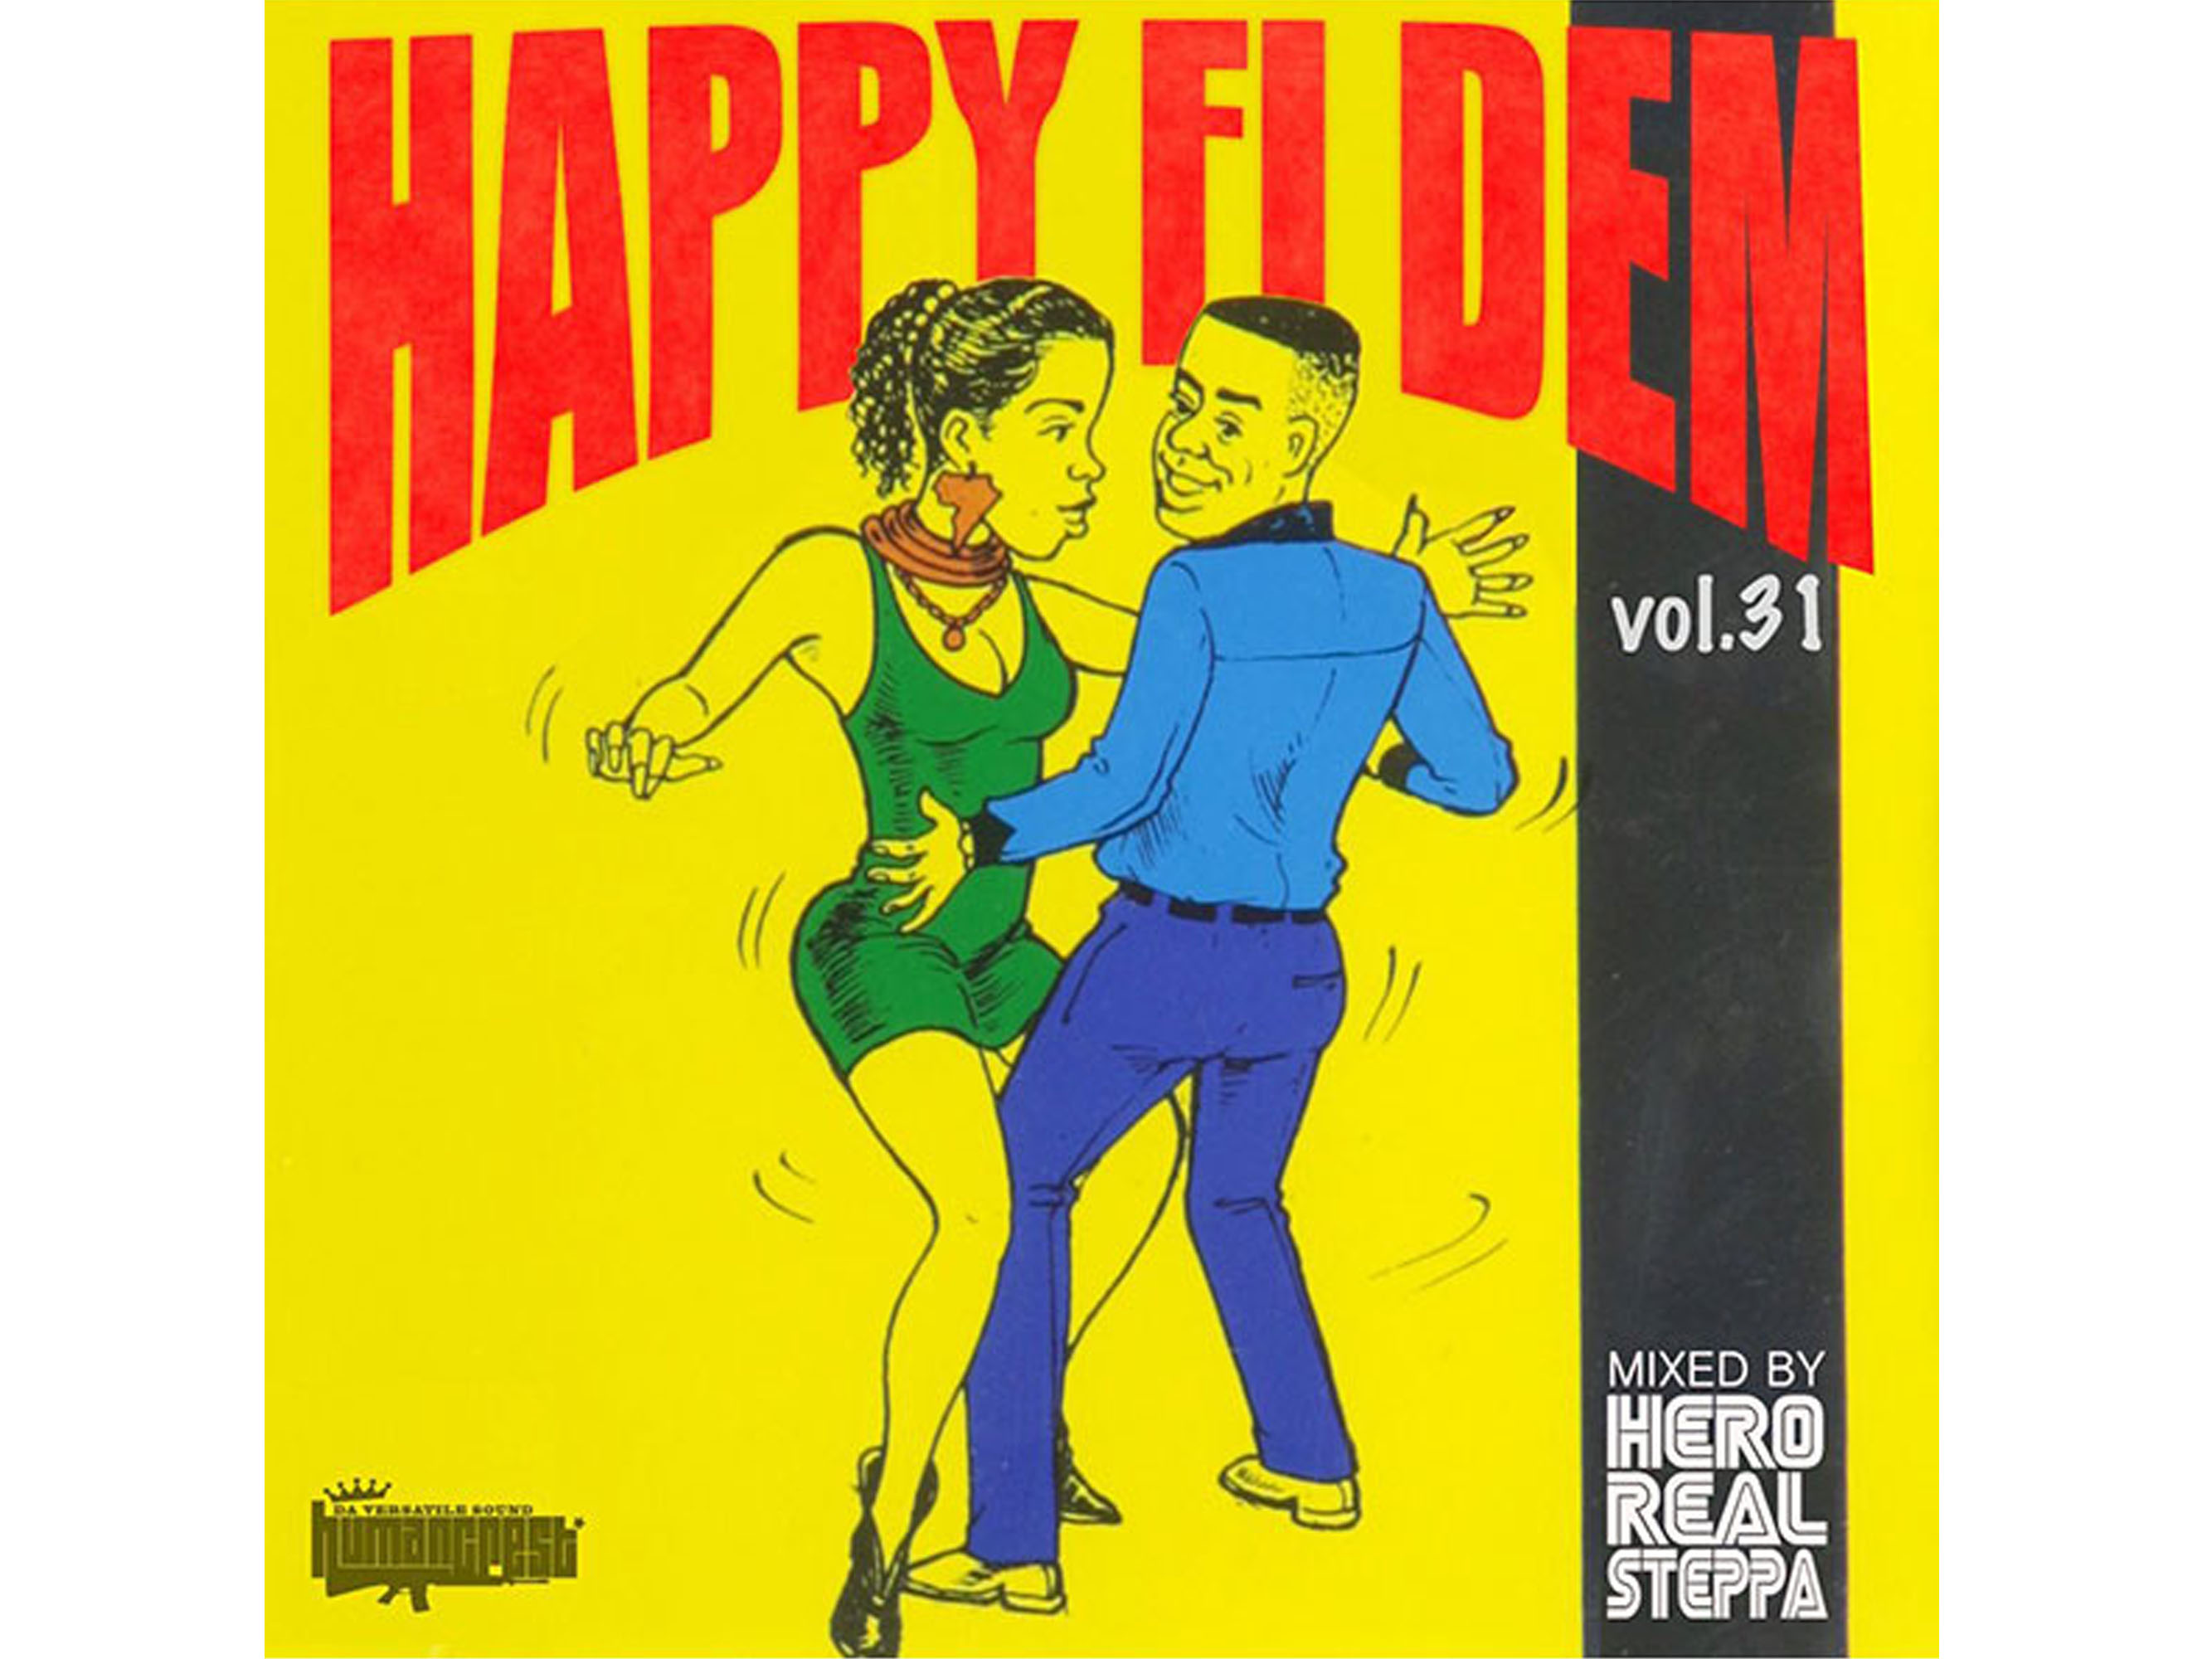 HAPPY FI DEM vol.31 - HUMAN CREST